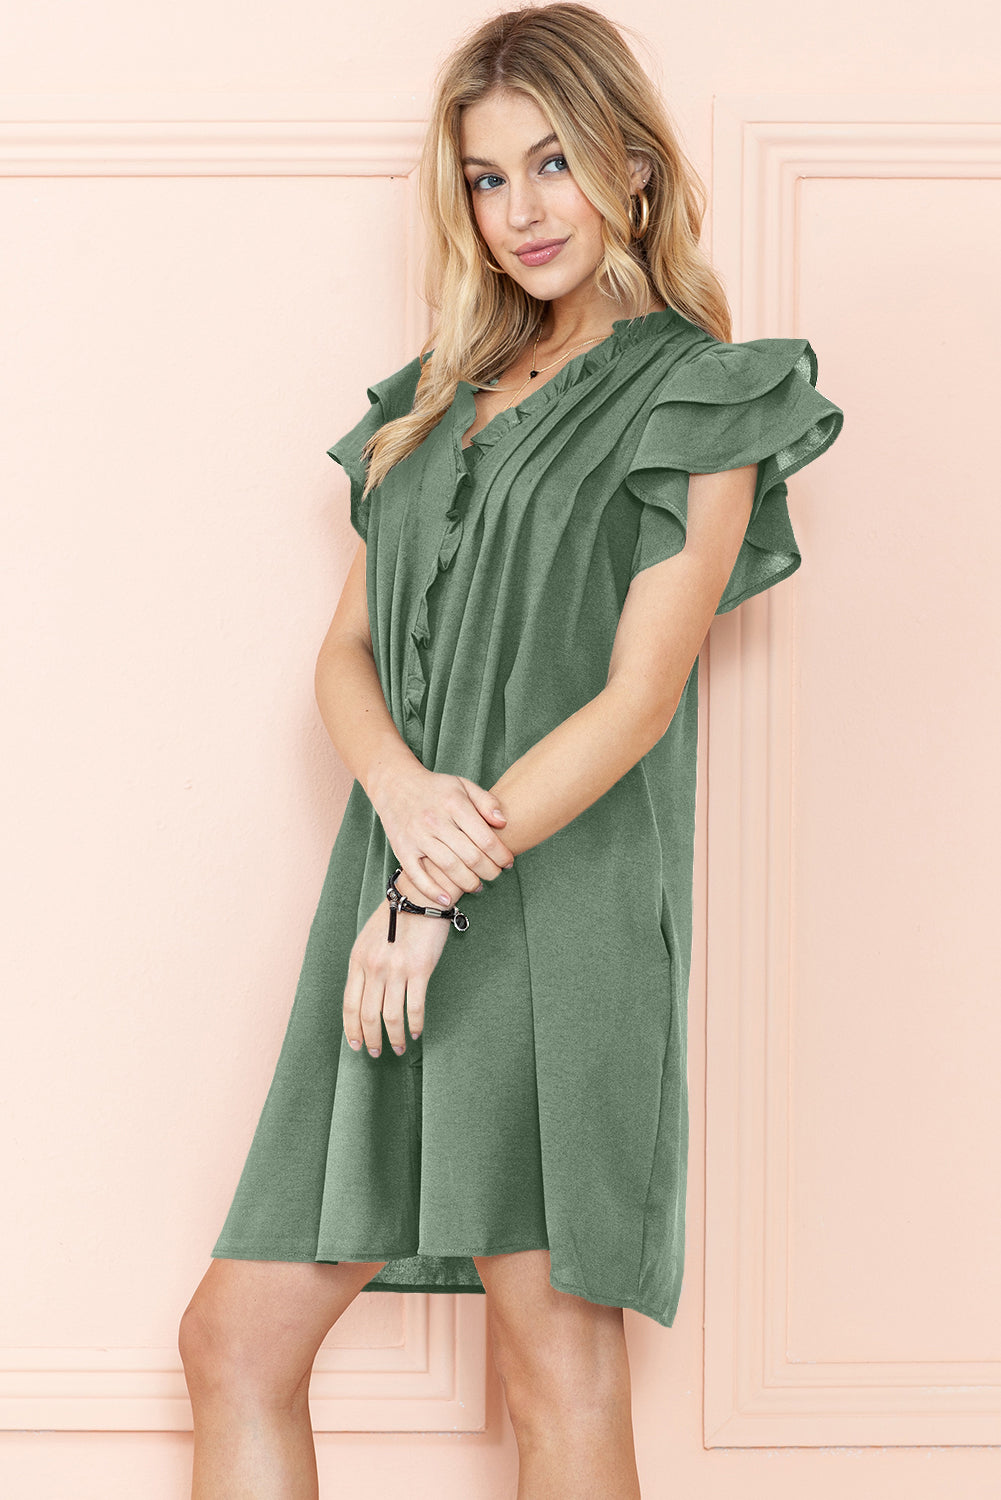 Mist Green Ruffle Trim Sleeve V Neck Pocketed Mini Dress